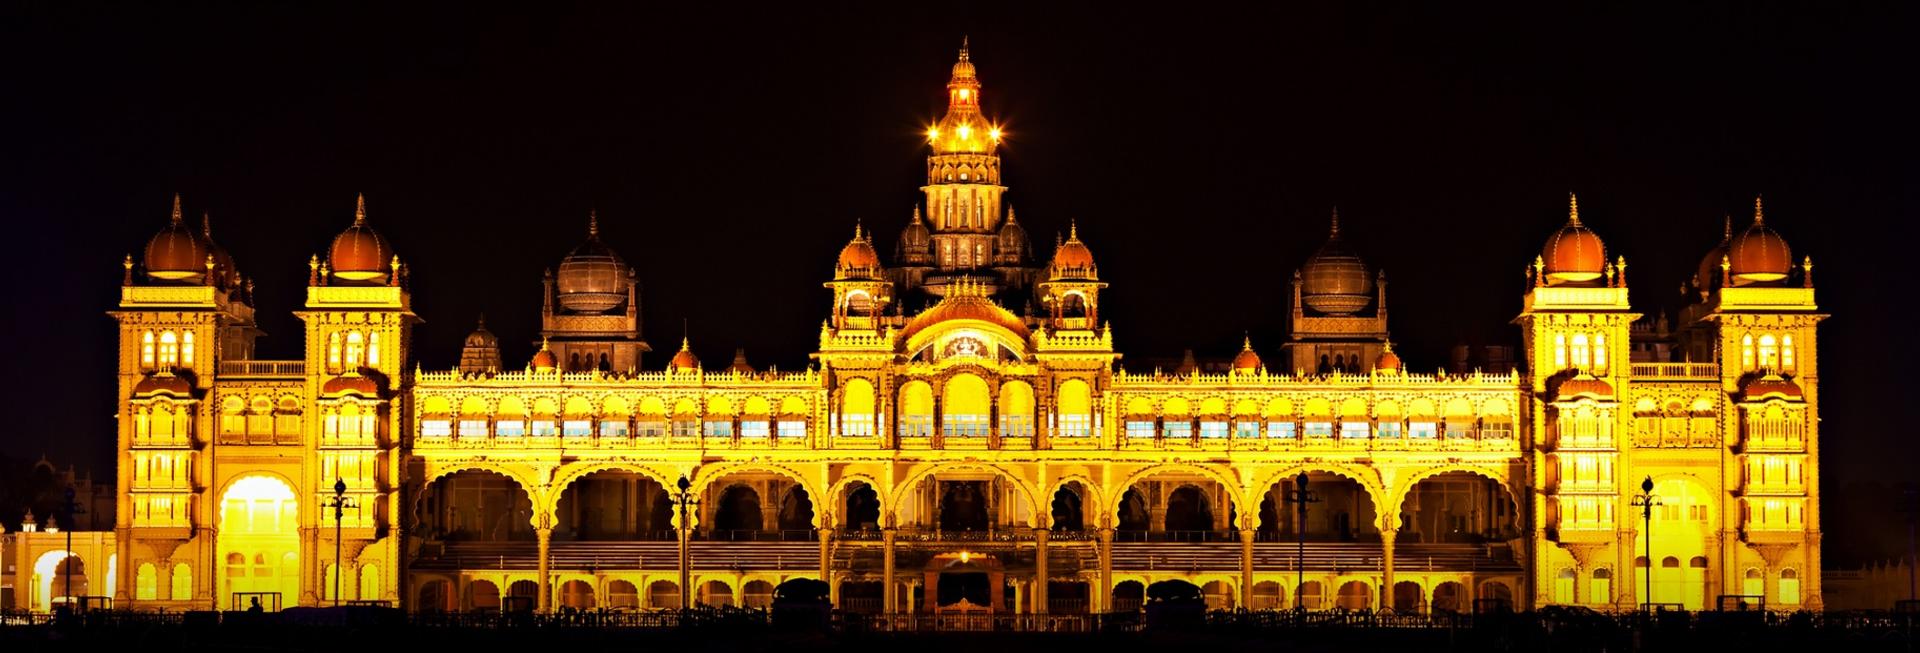 Palace at night, Mysore